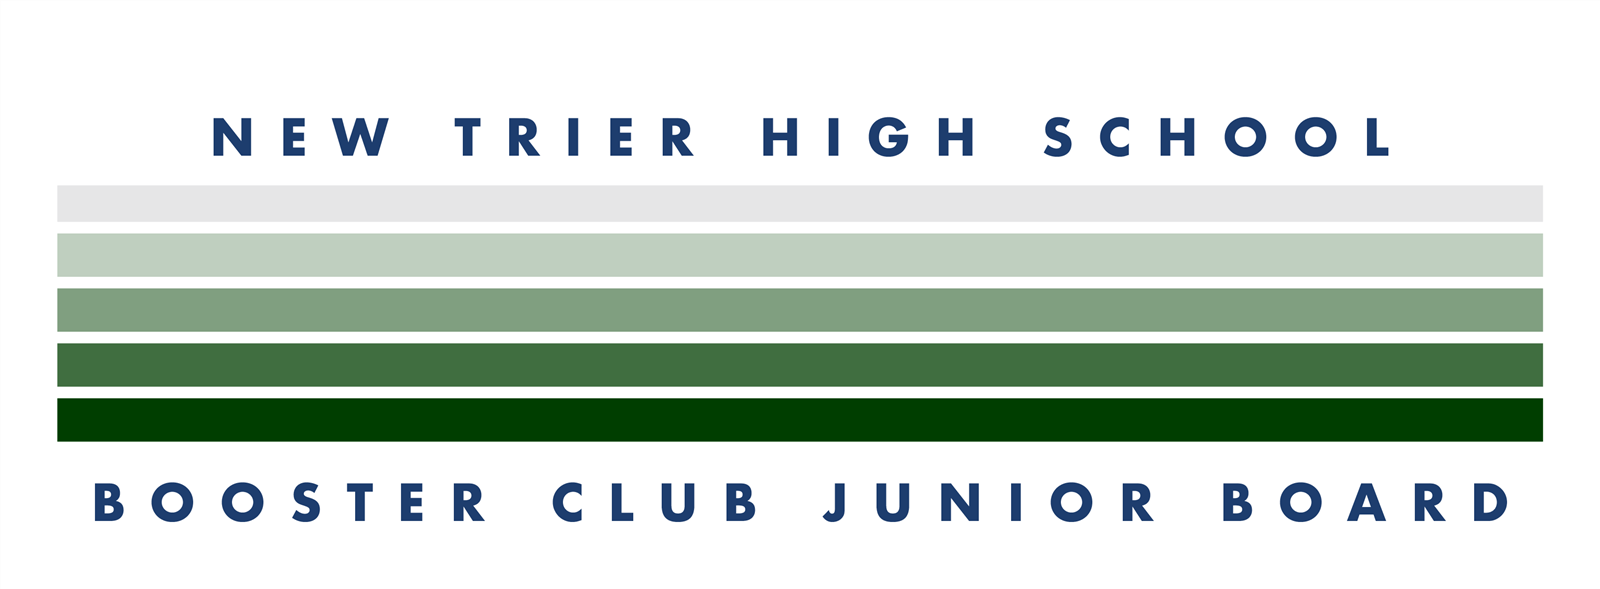 Booster Club Junior Board banner